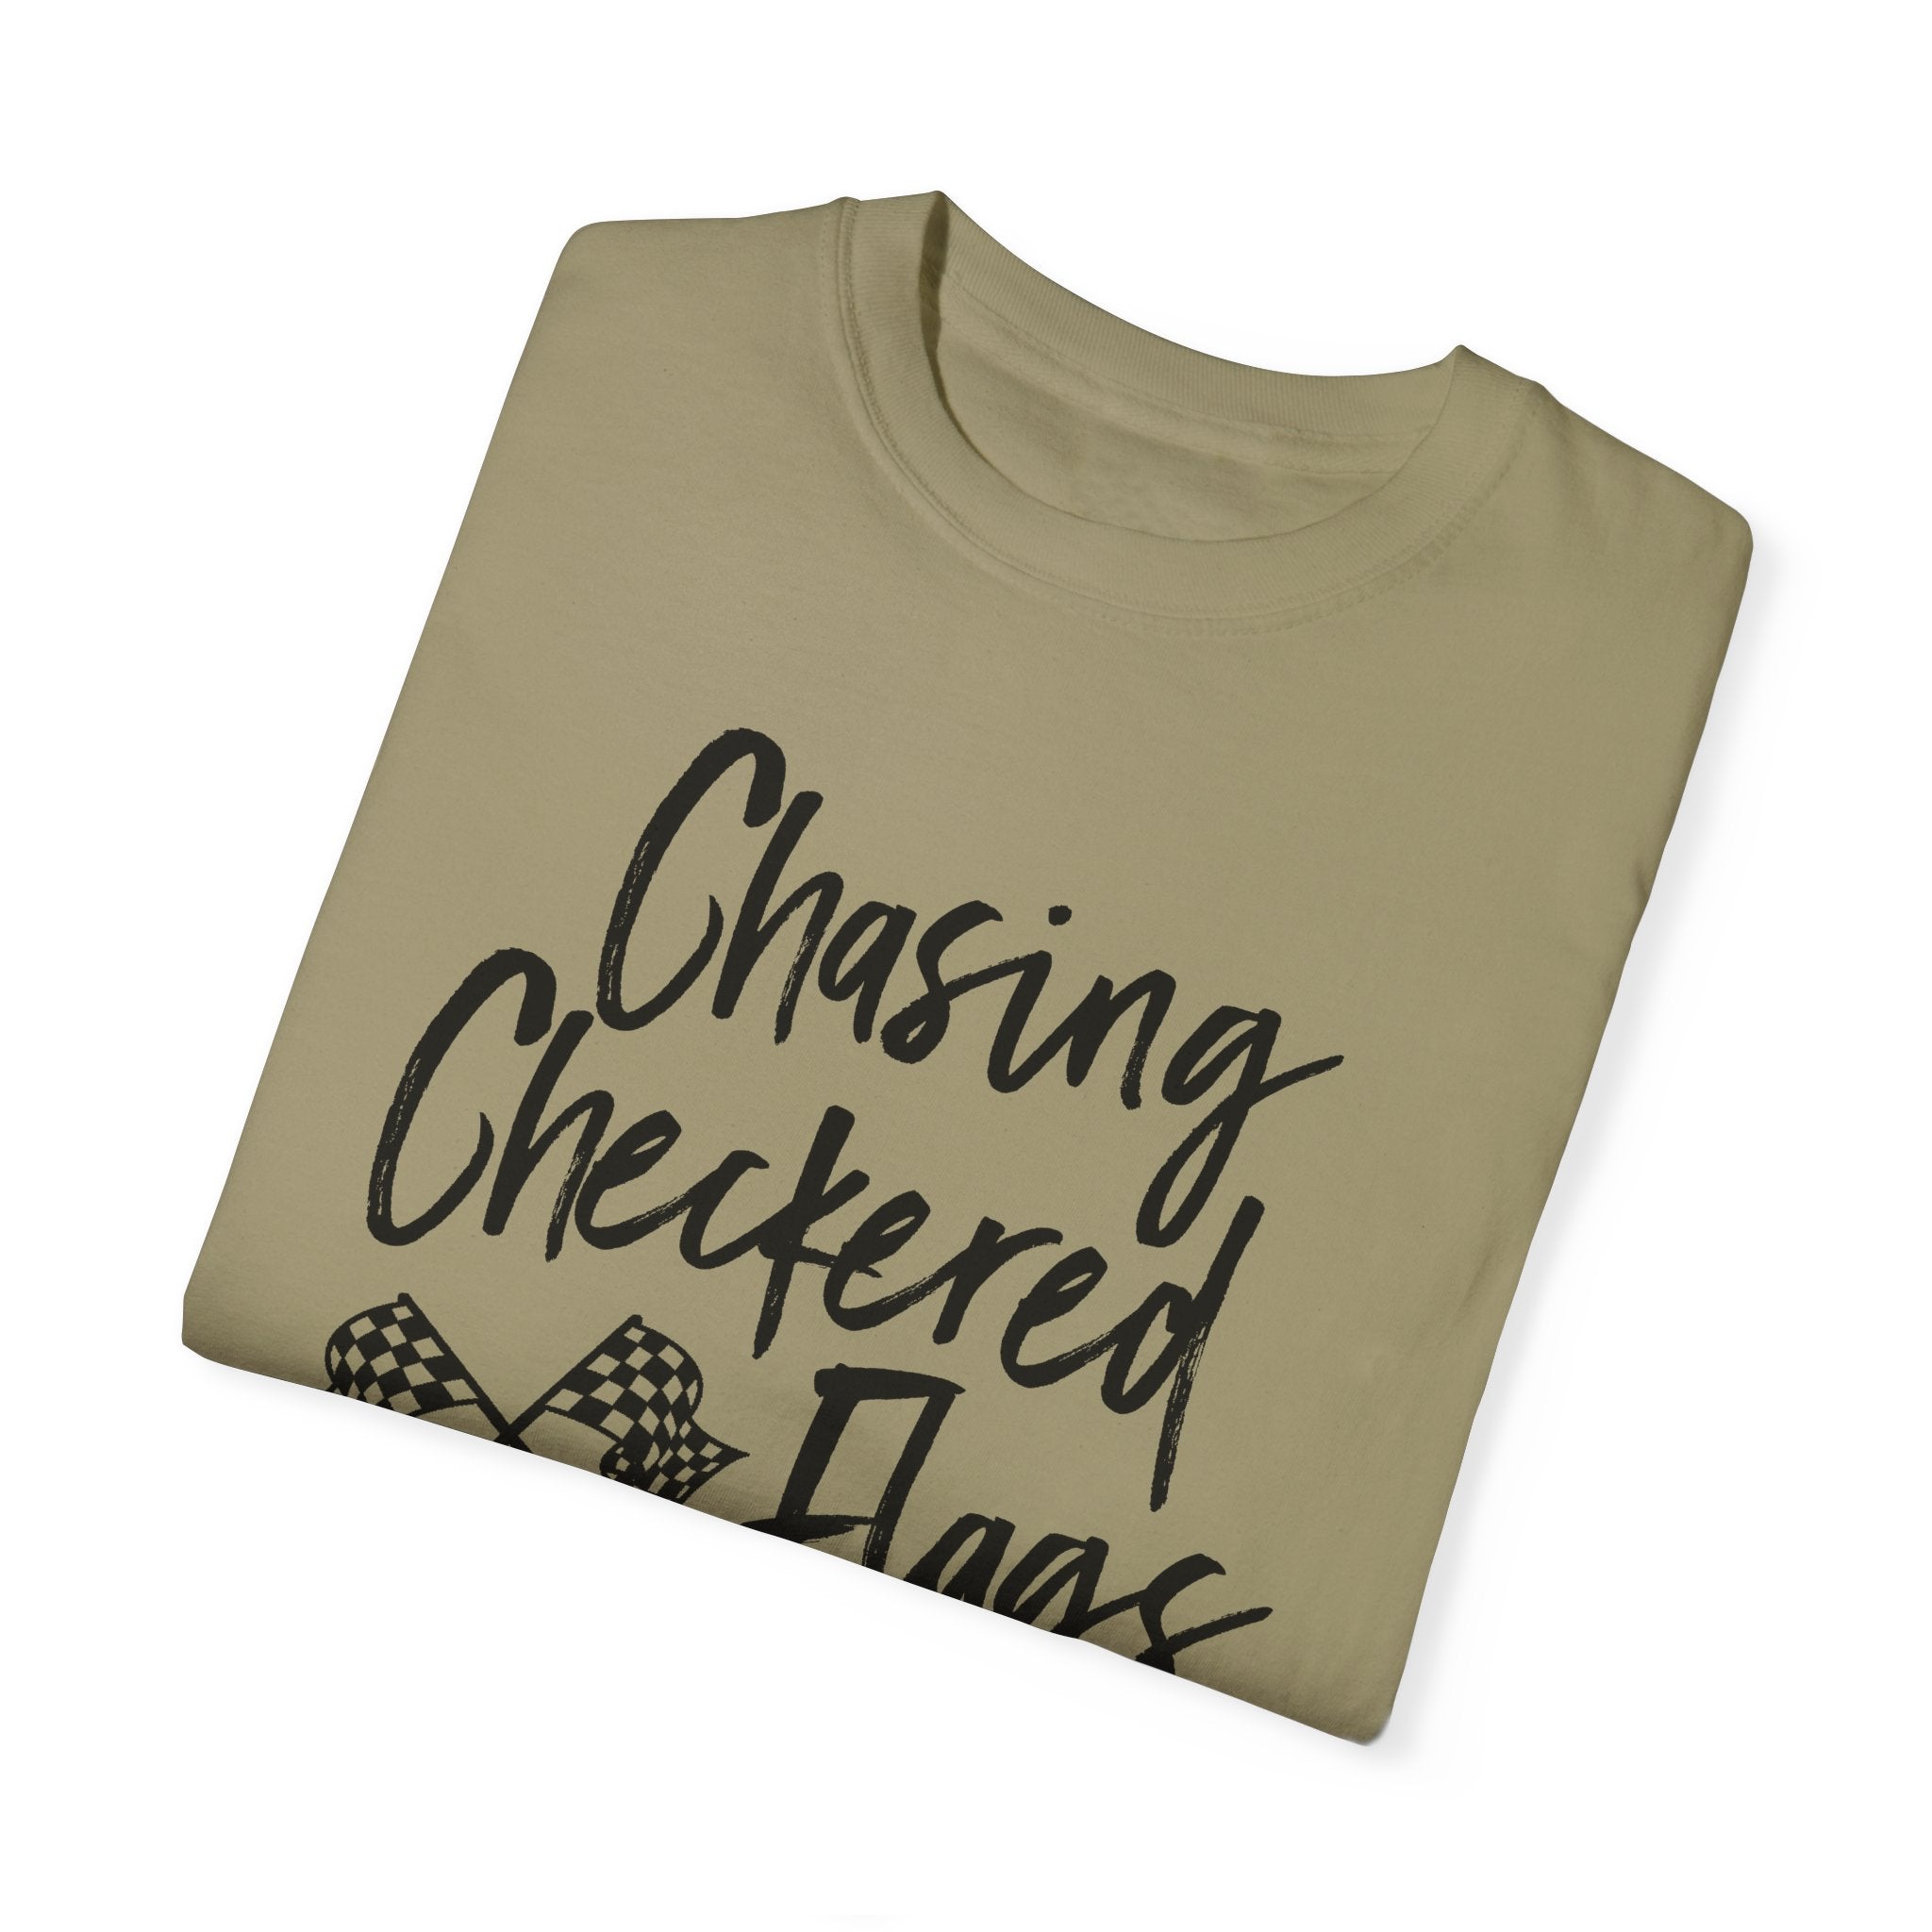 Chasing Checkered Flags Unisex Heavyweight Ladies Racing Tee